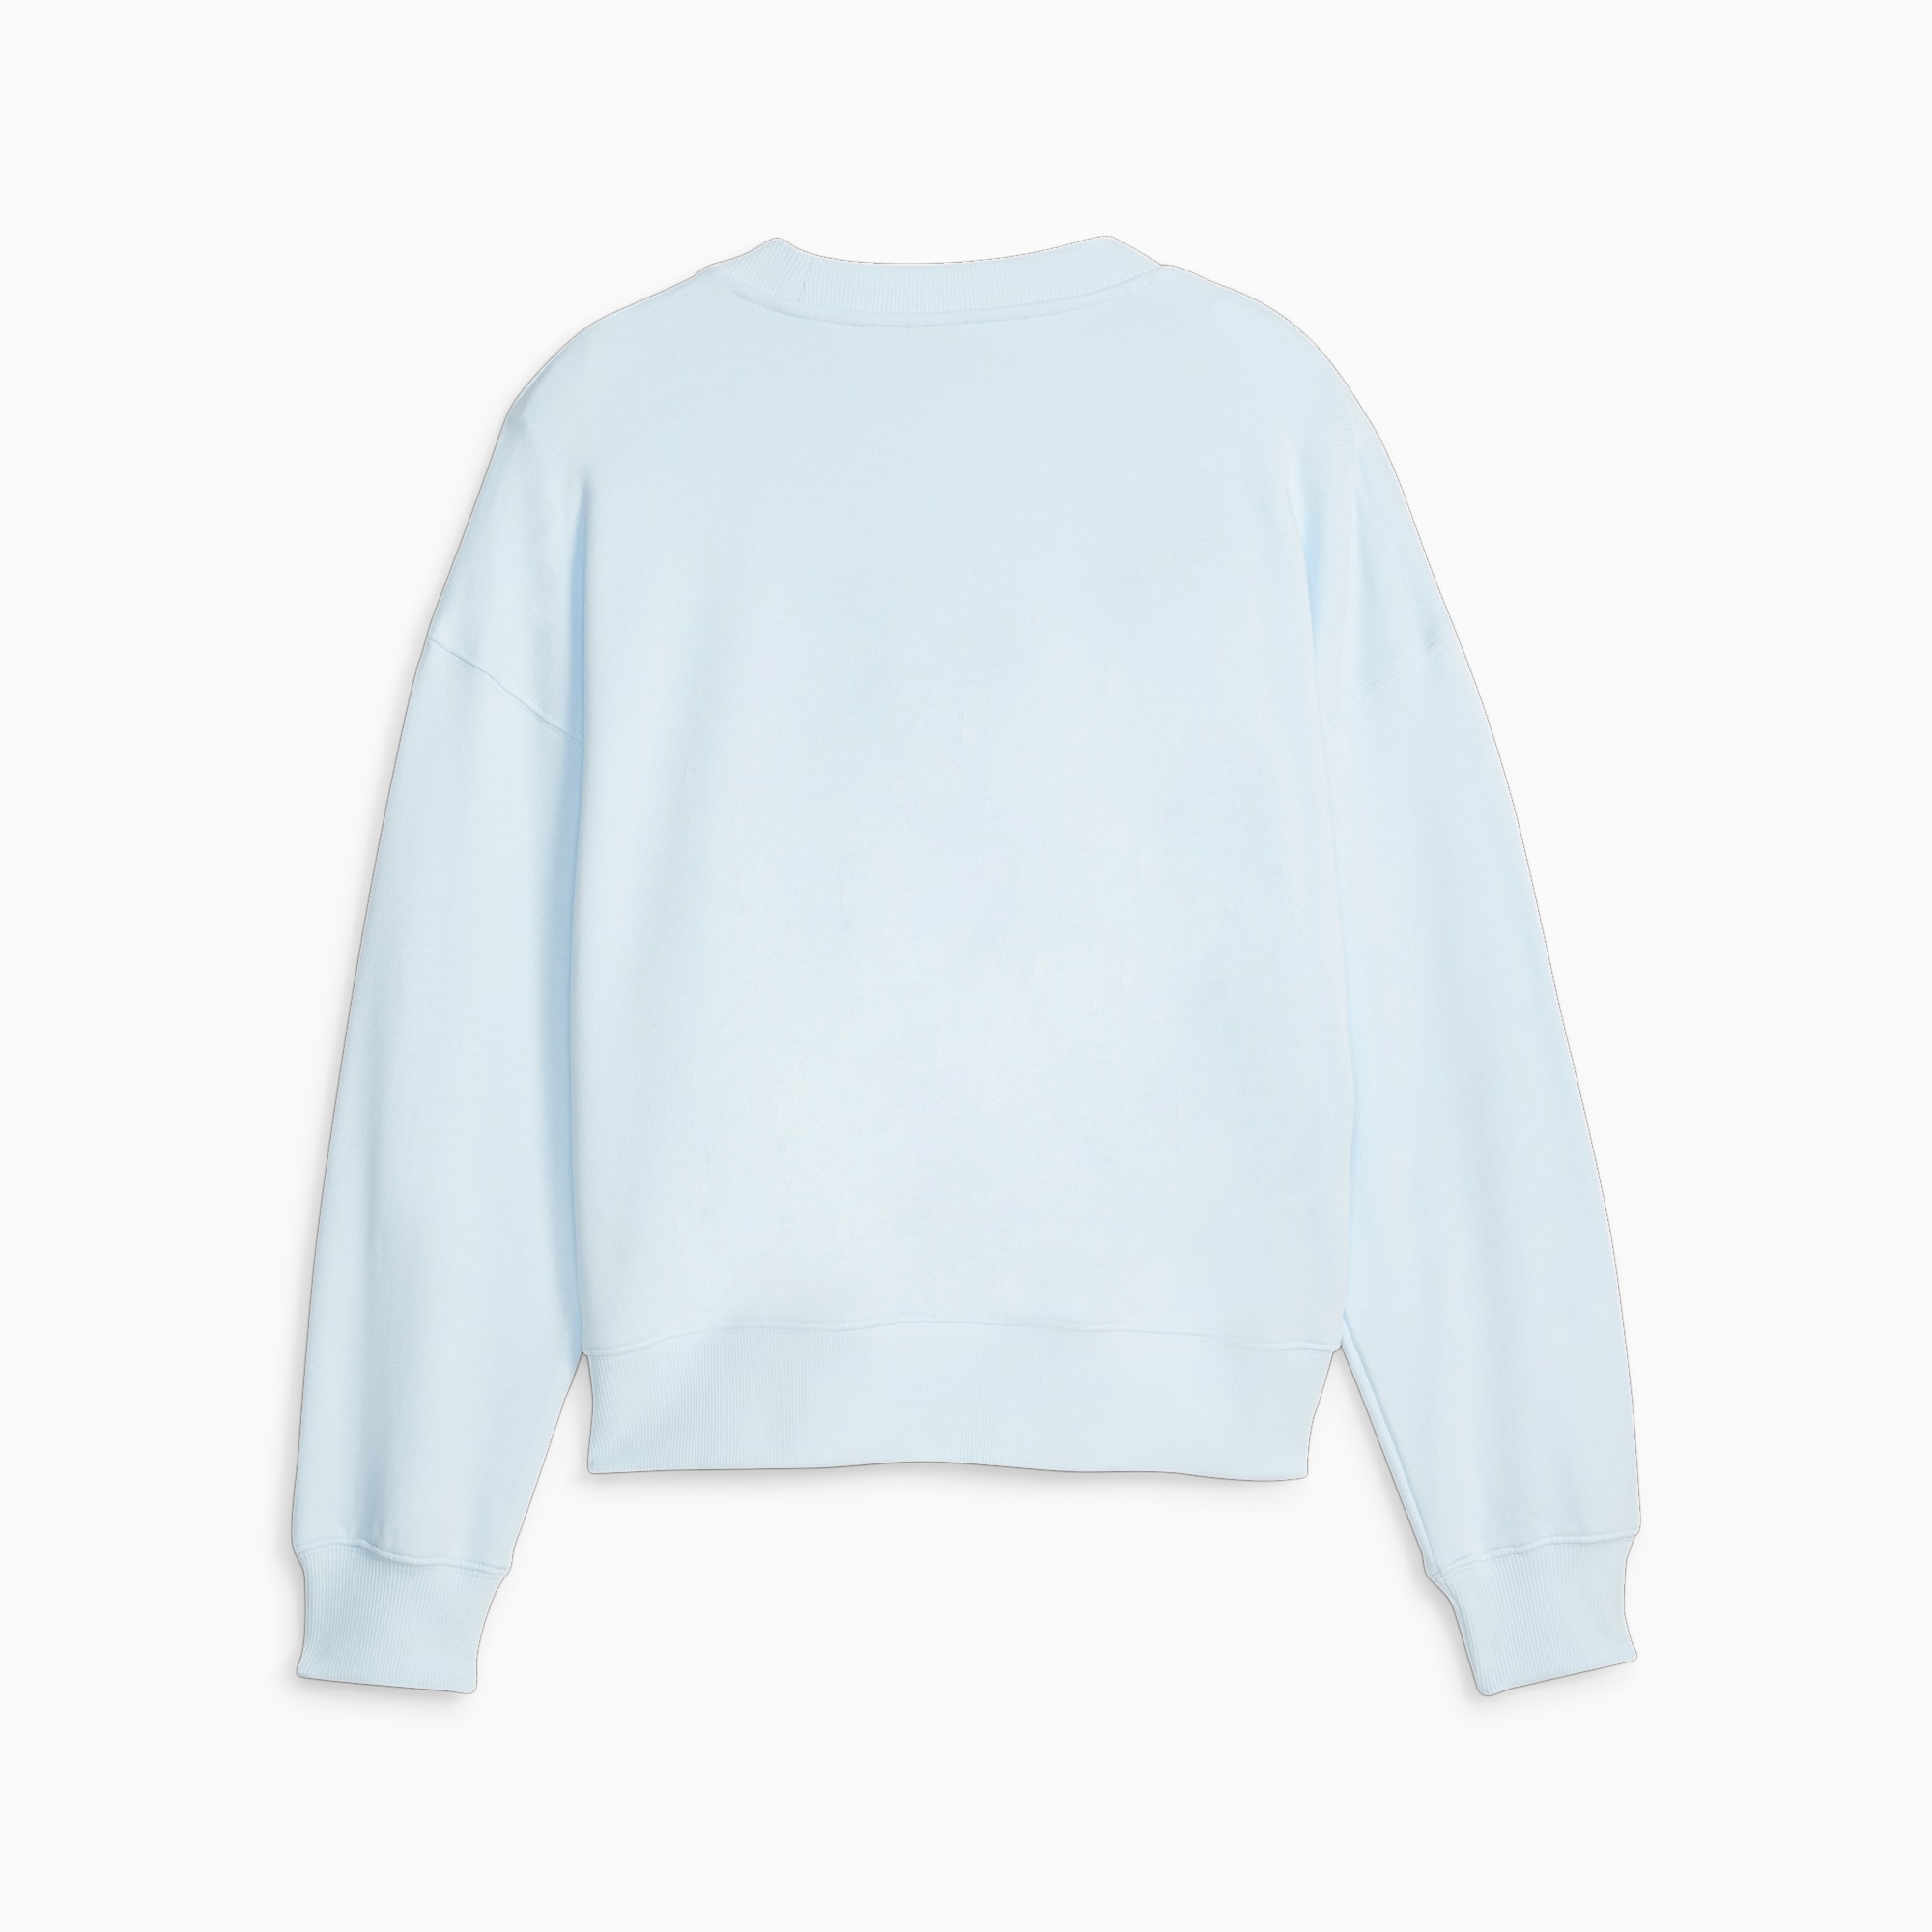 PUMA Classics Women's Oversized Sweatshirt, Icy Blue, Size S, Clothing